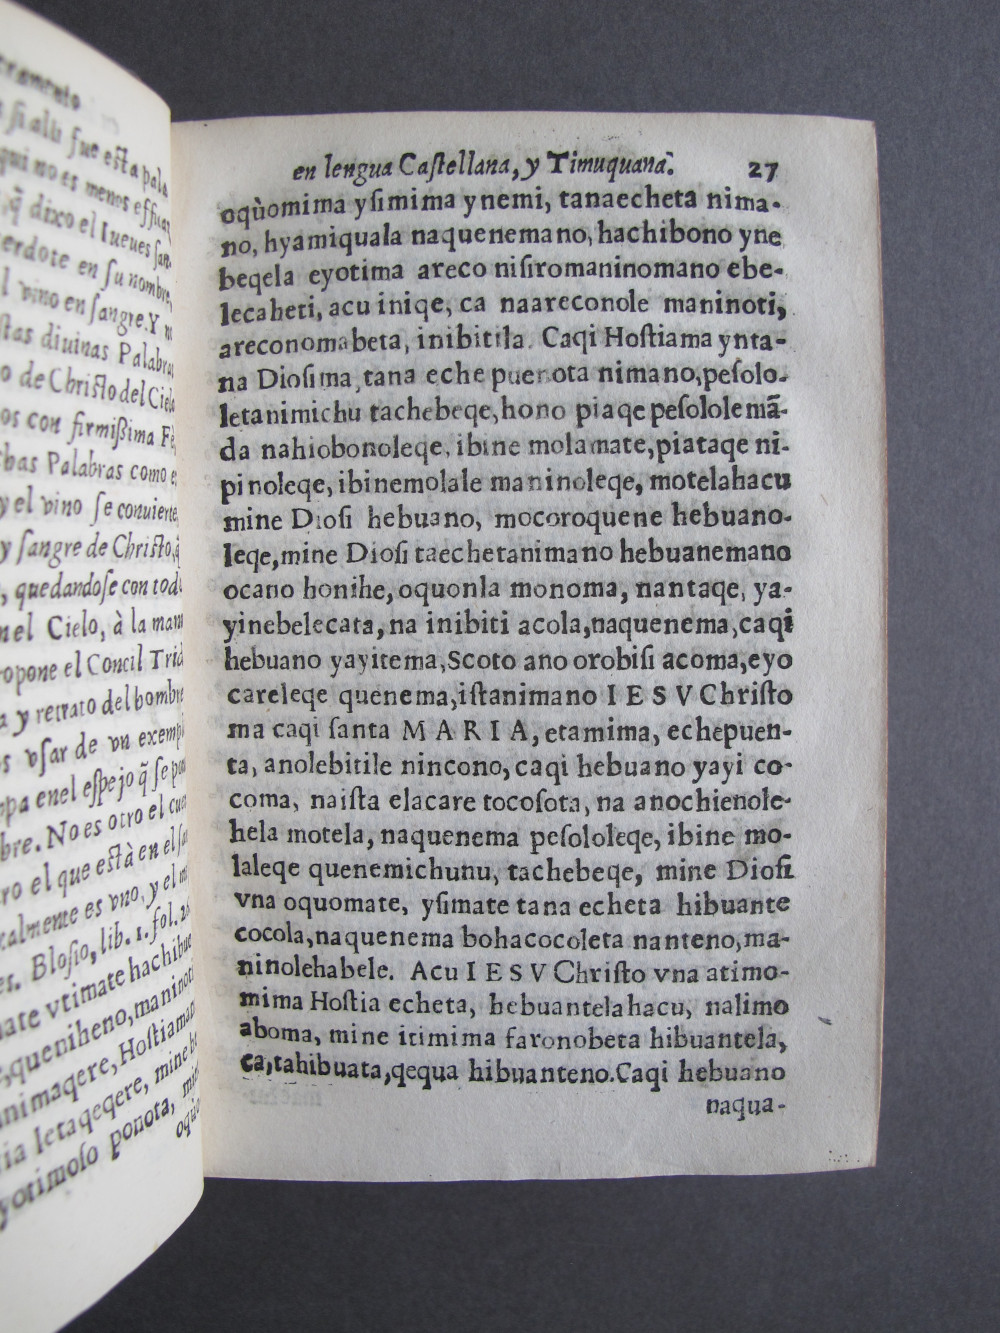 Folio D6 recto